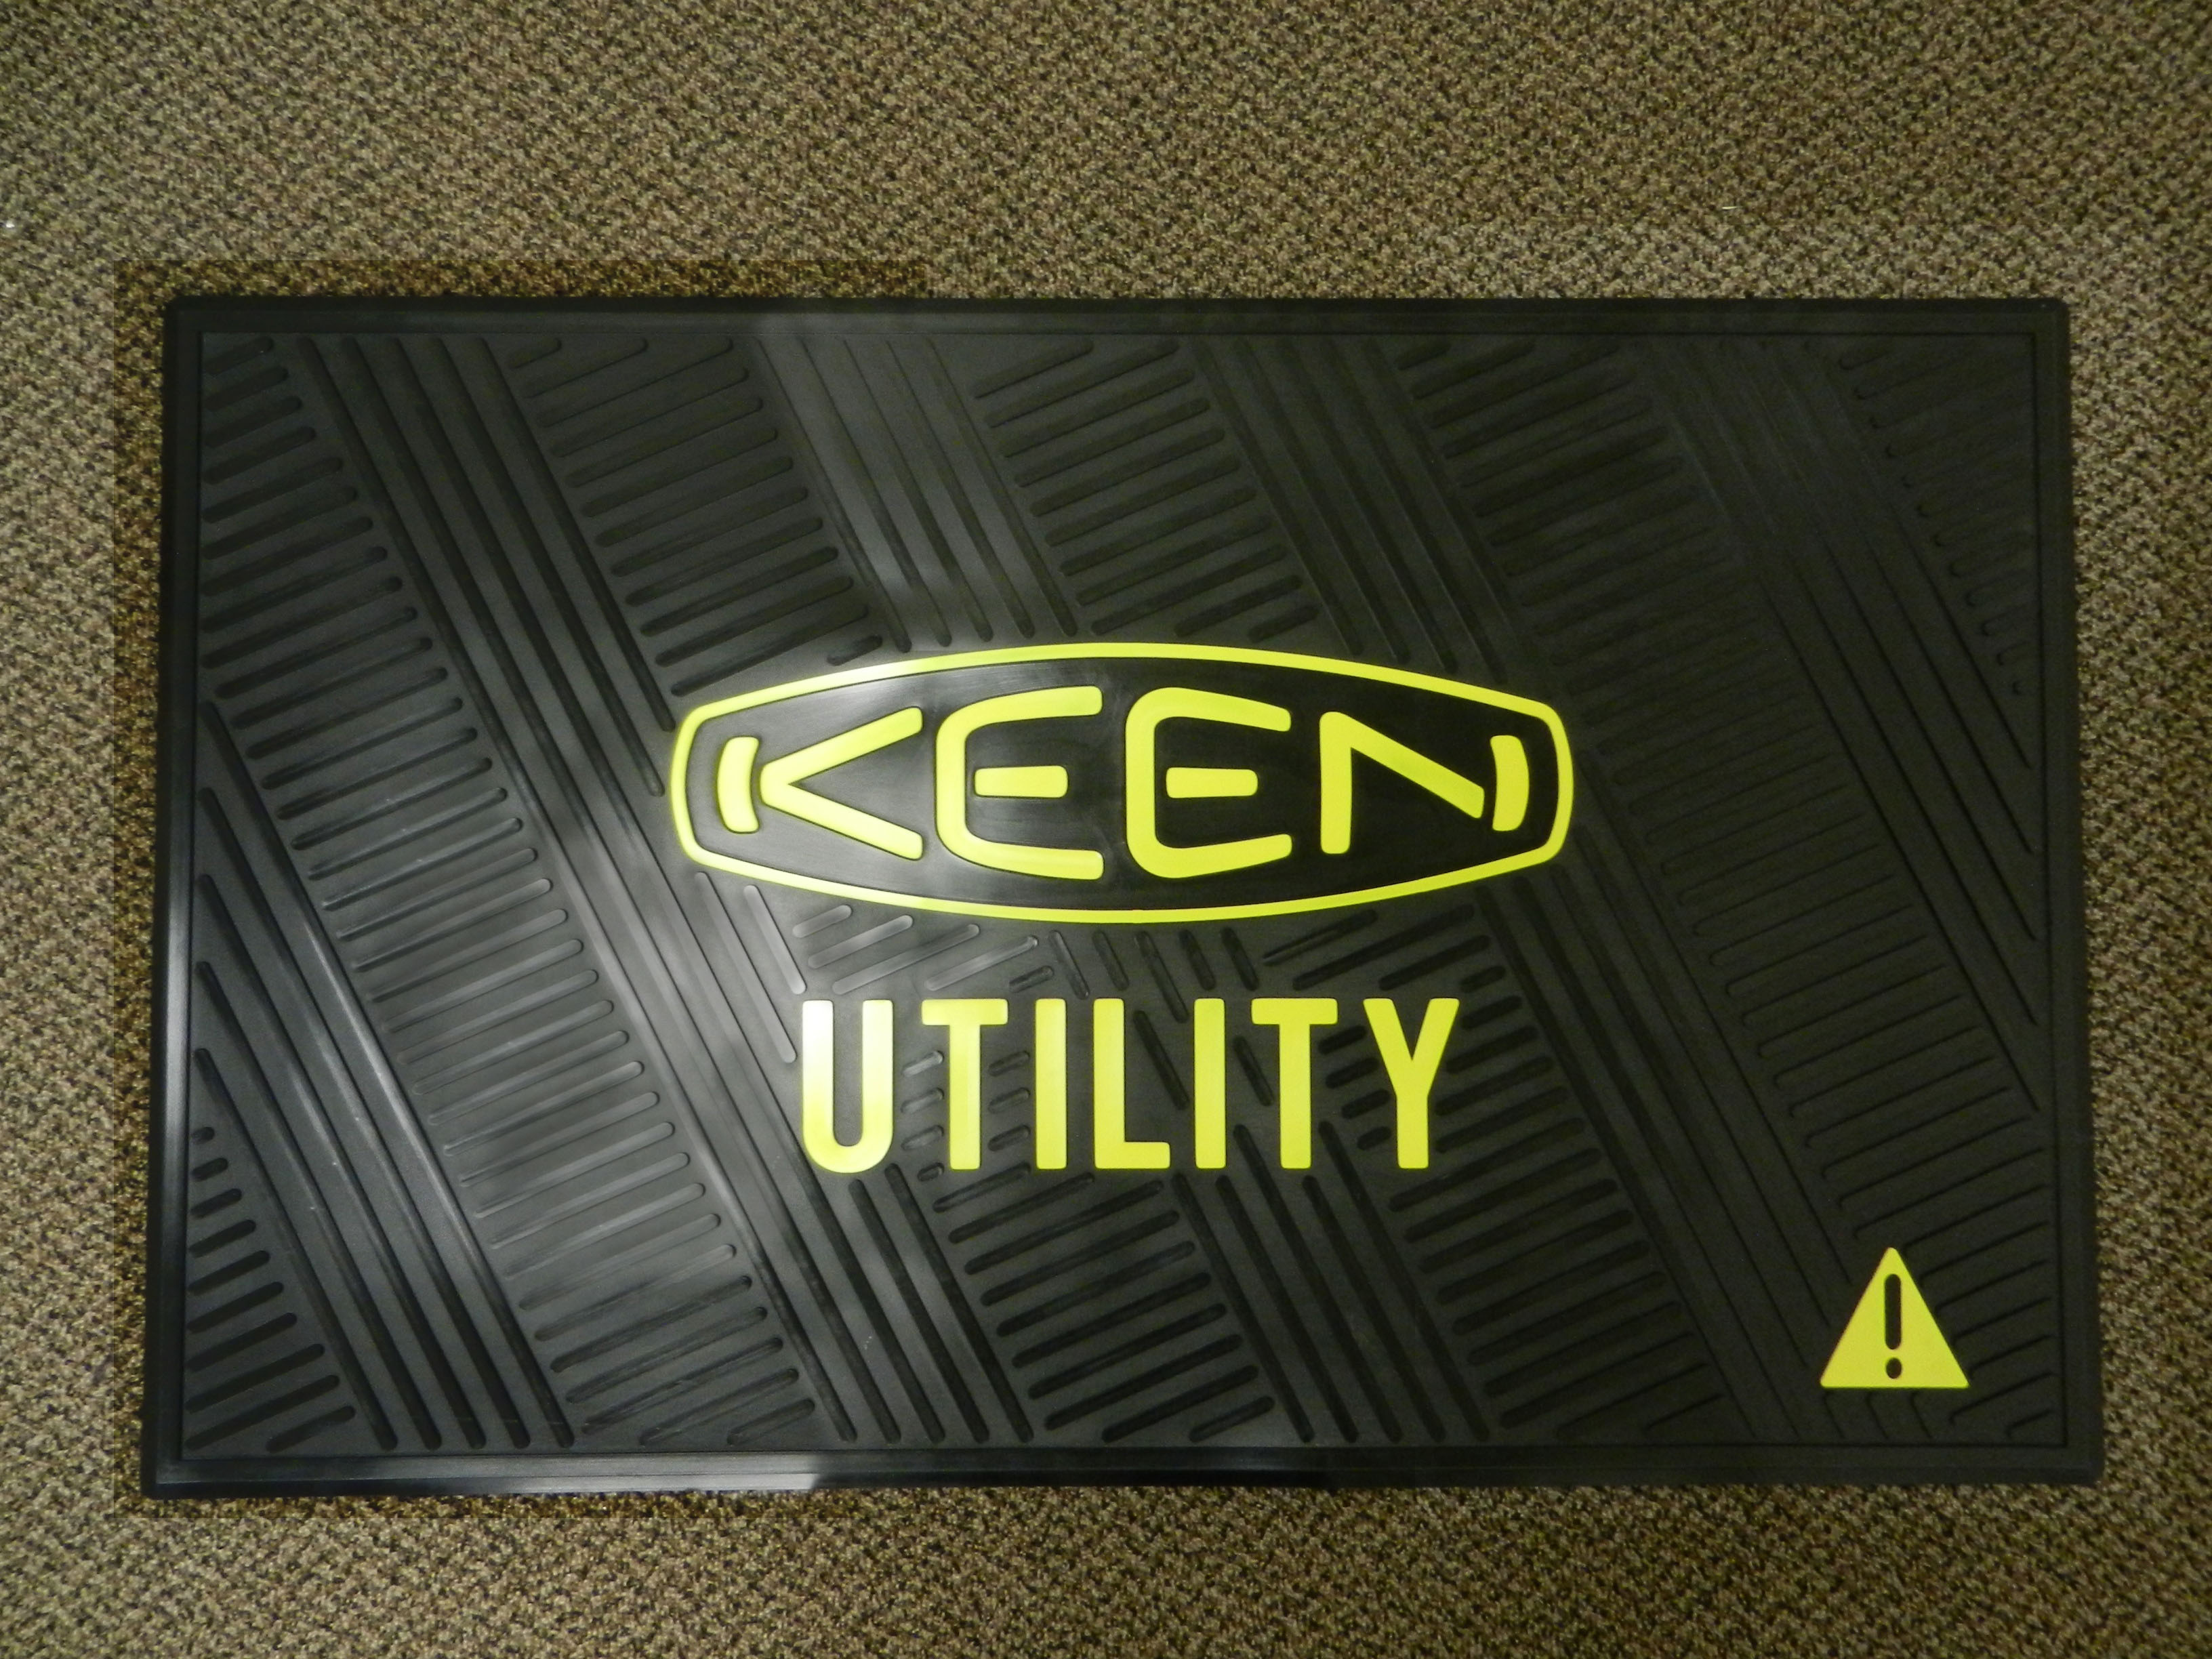 keen utility logo